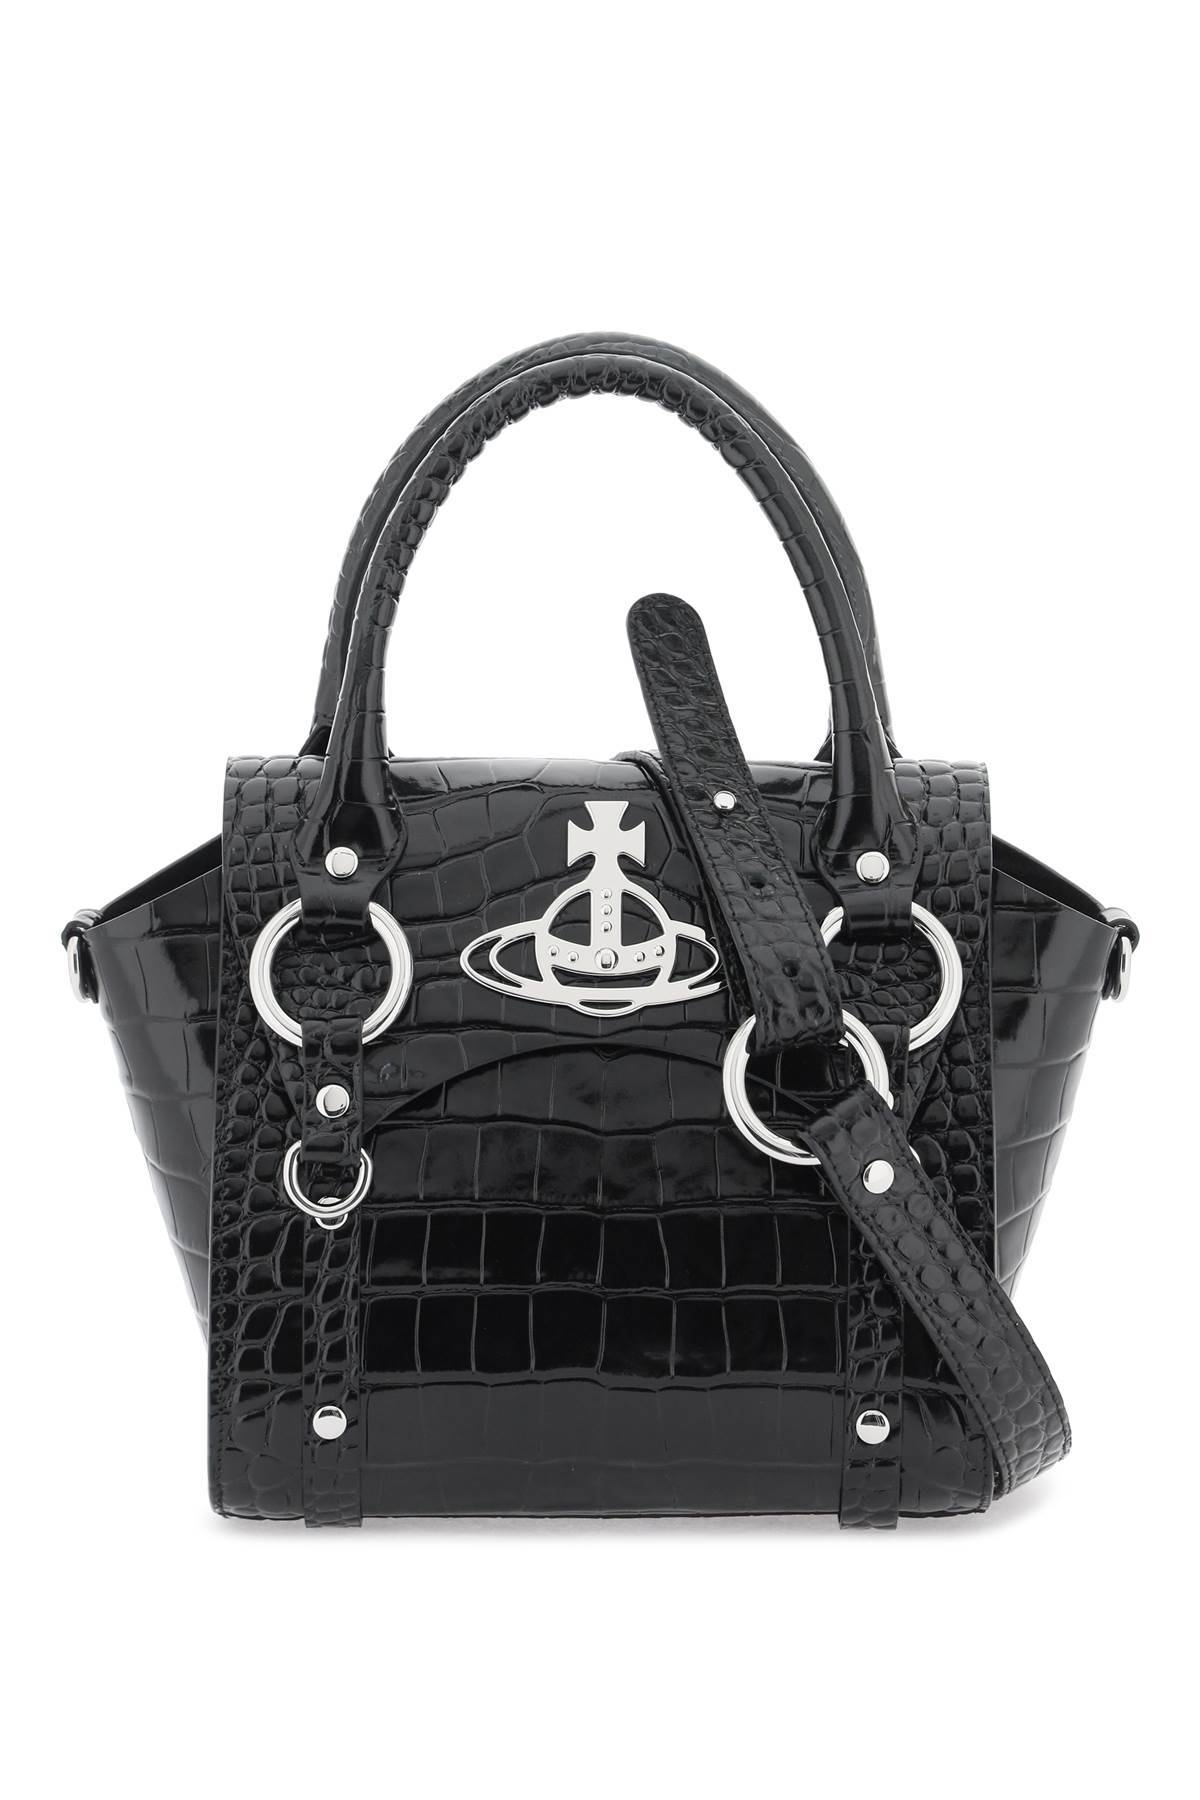 Vivienne Westwood VIVIENNE WESTWOOD small betty handbag